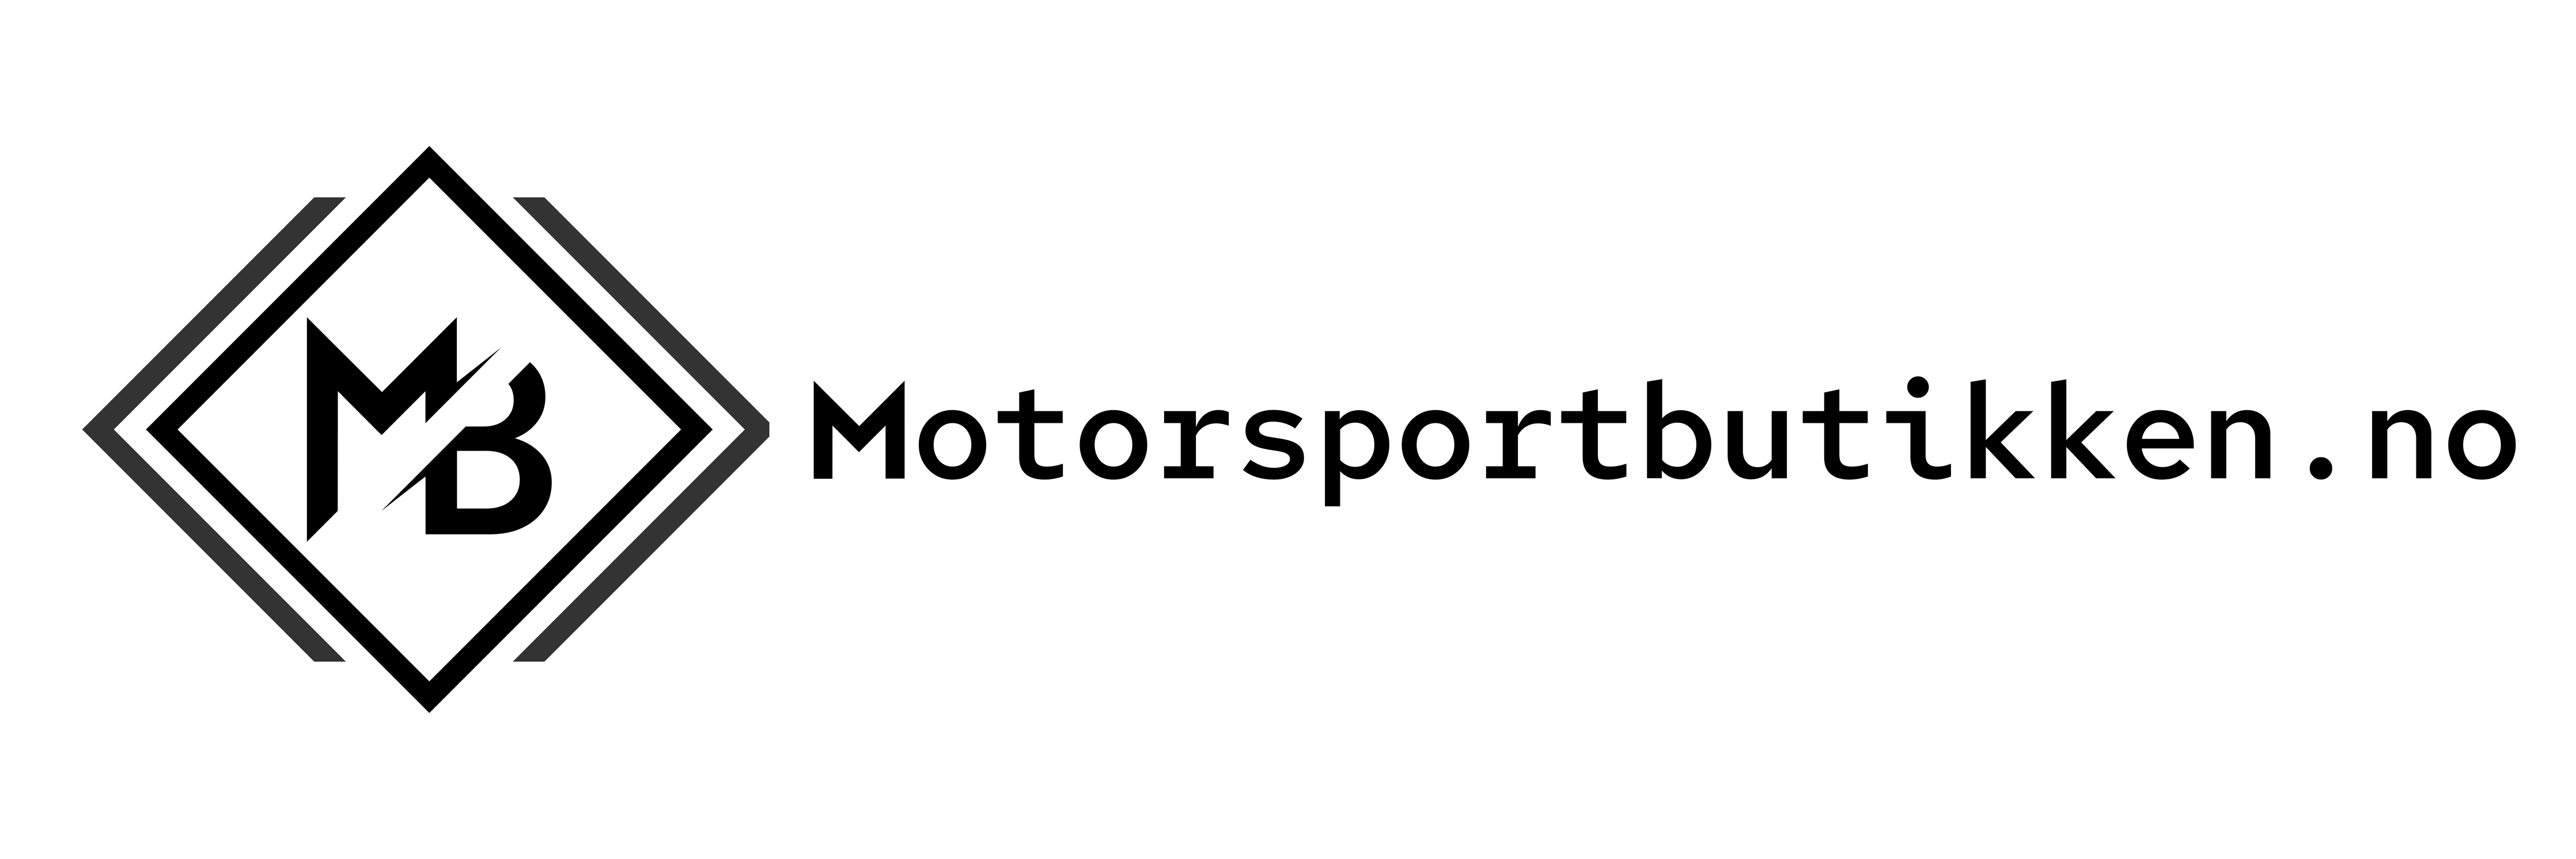 Motorsportbutikken.no